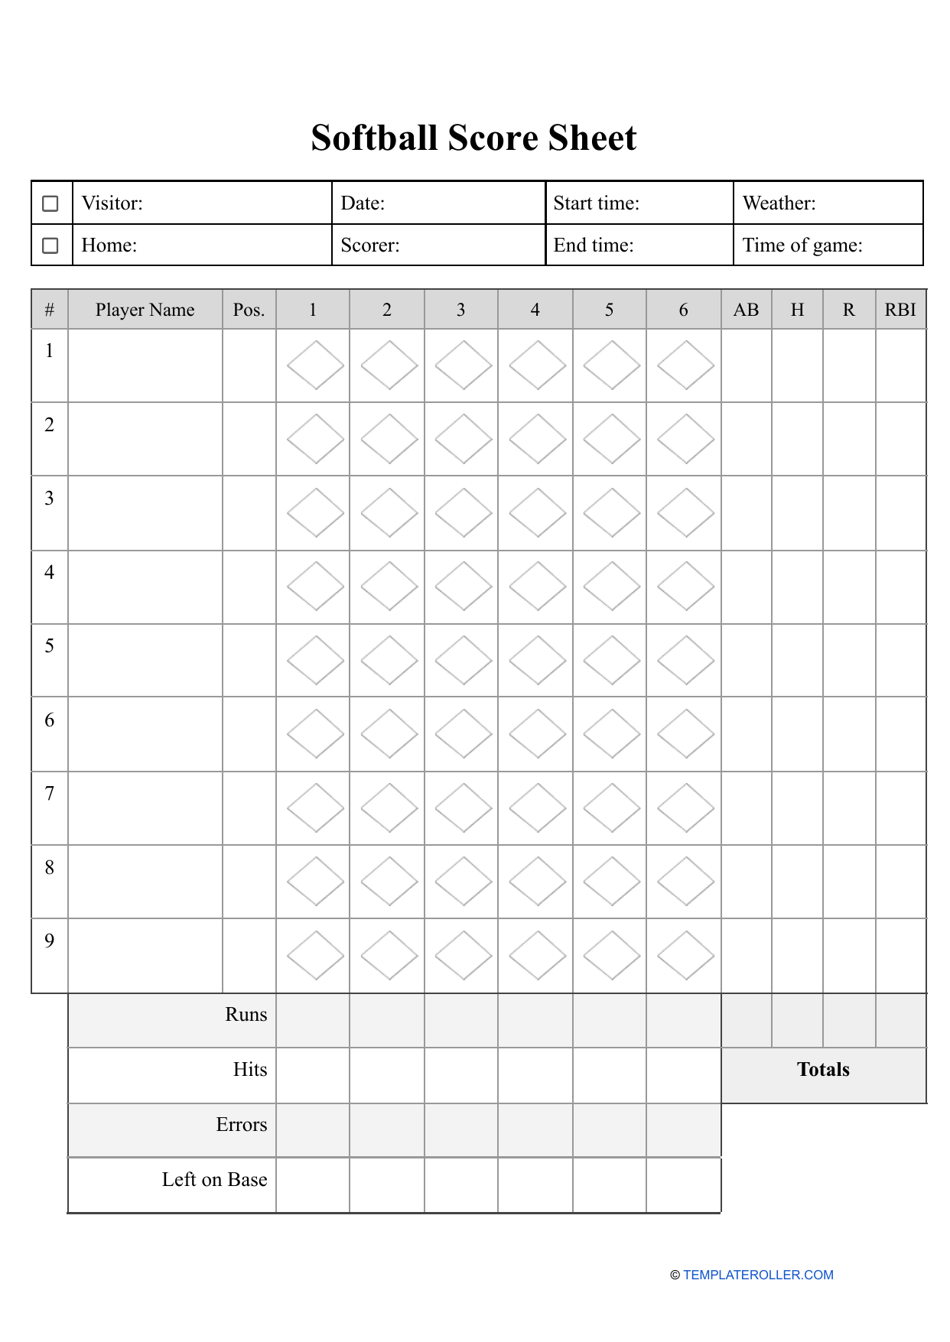 Softball Score Sheet Template - A comprehensive score sheet for keeping track of softball games